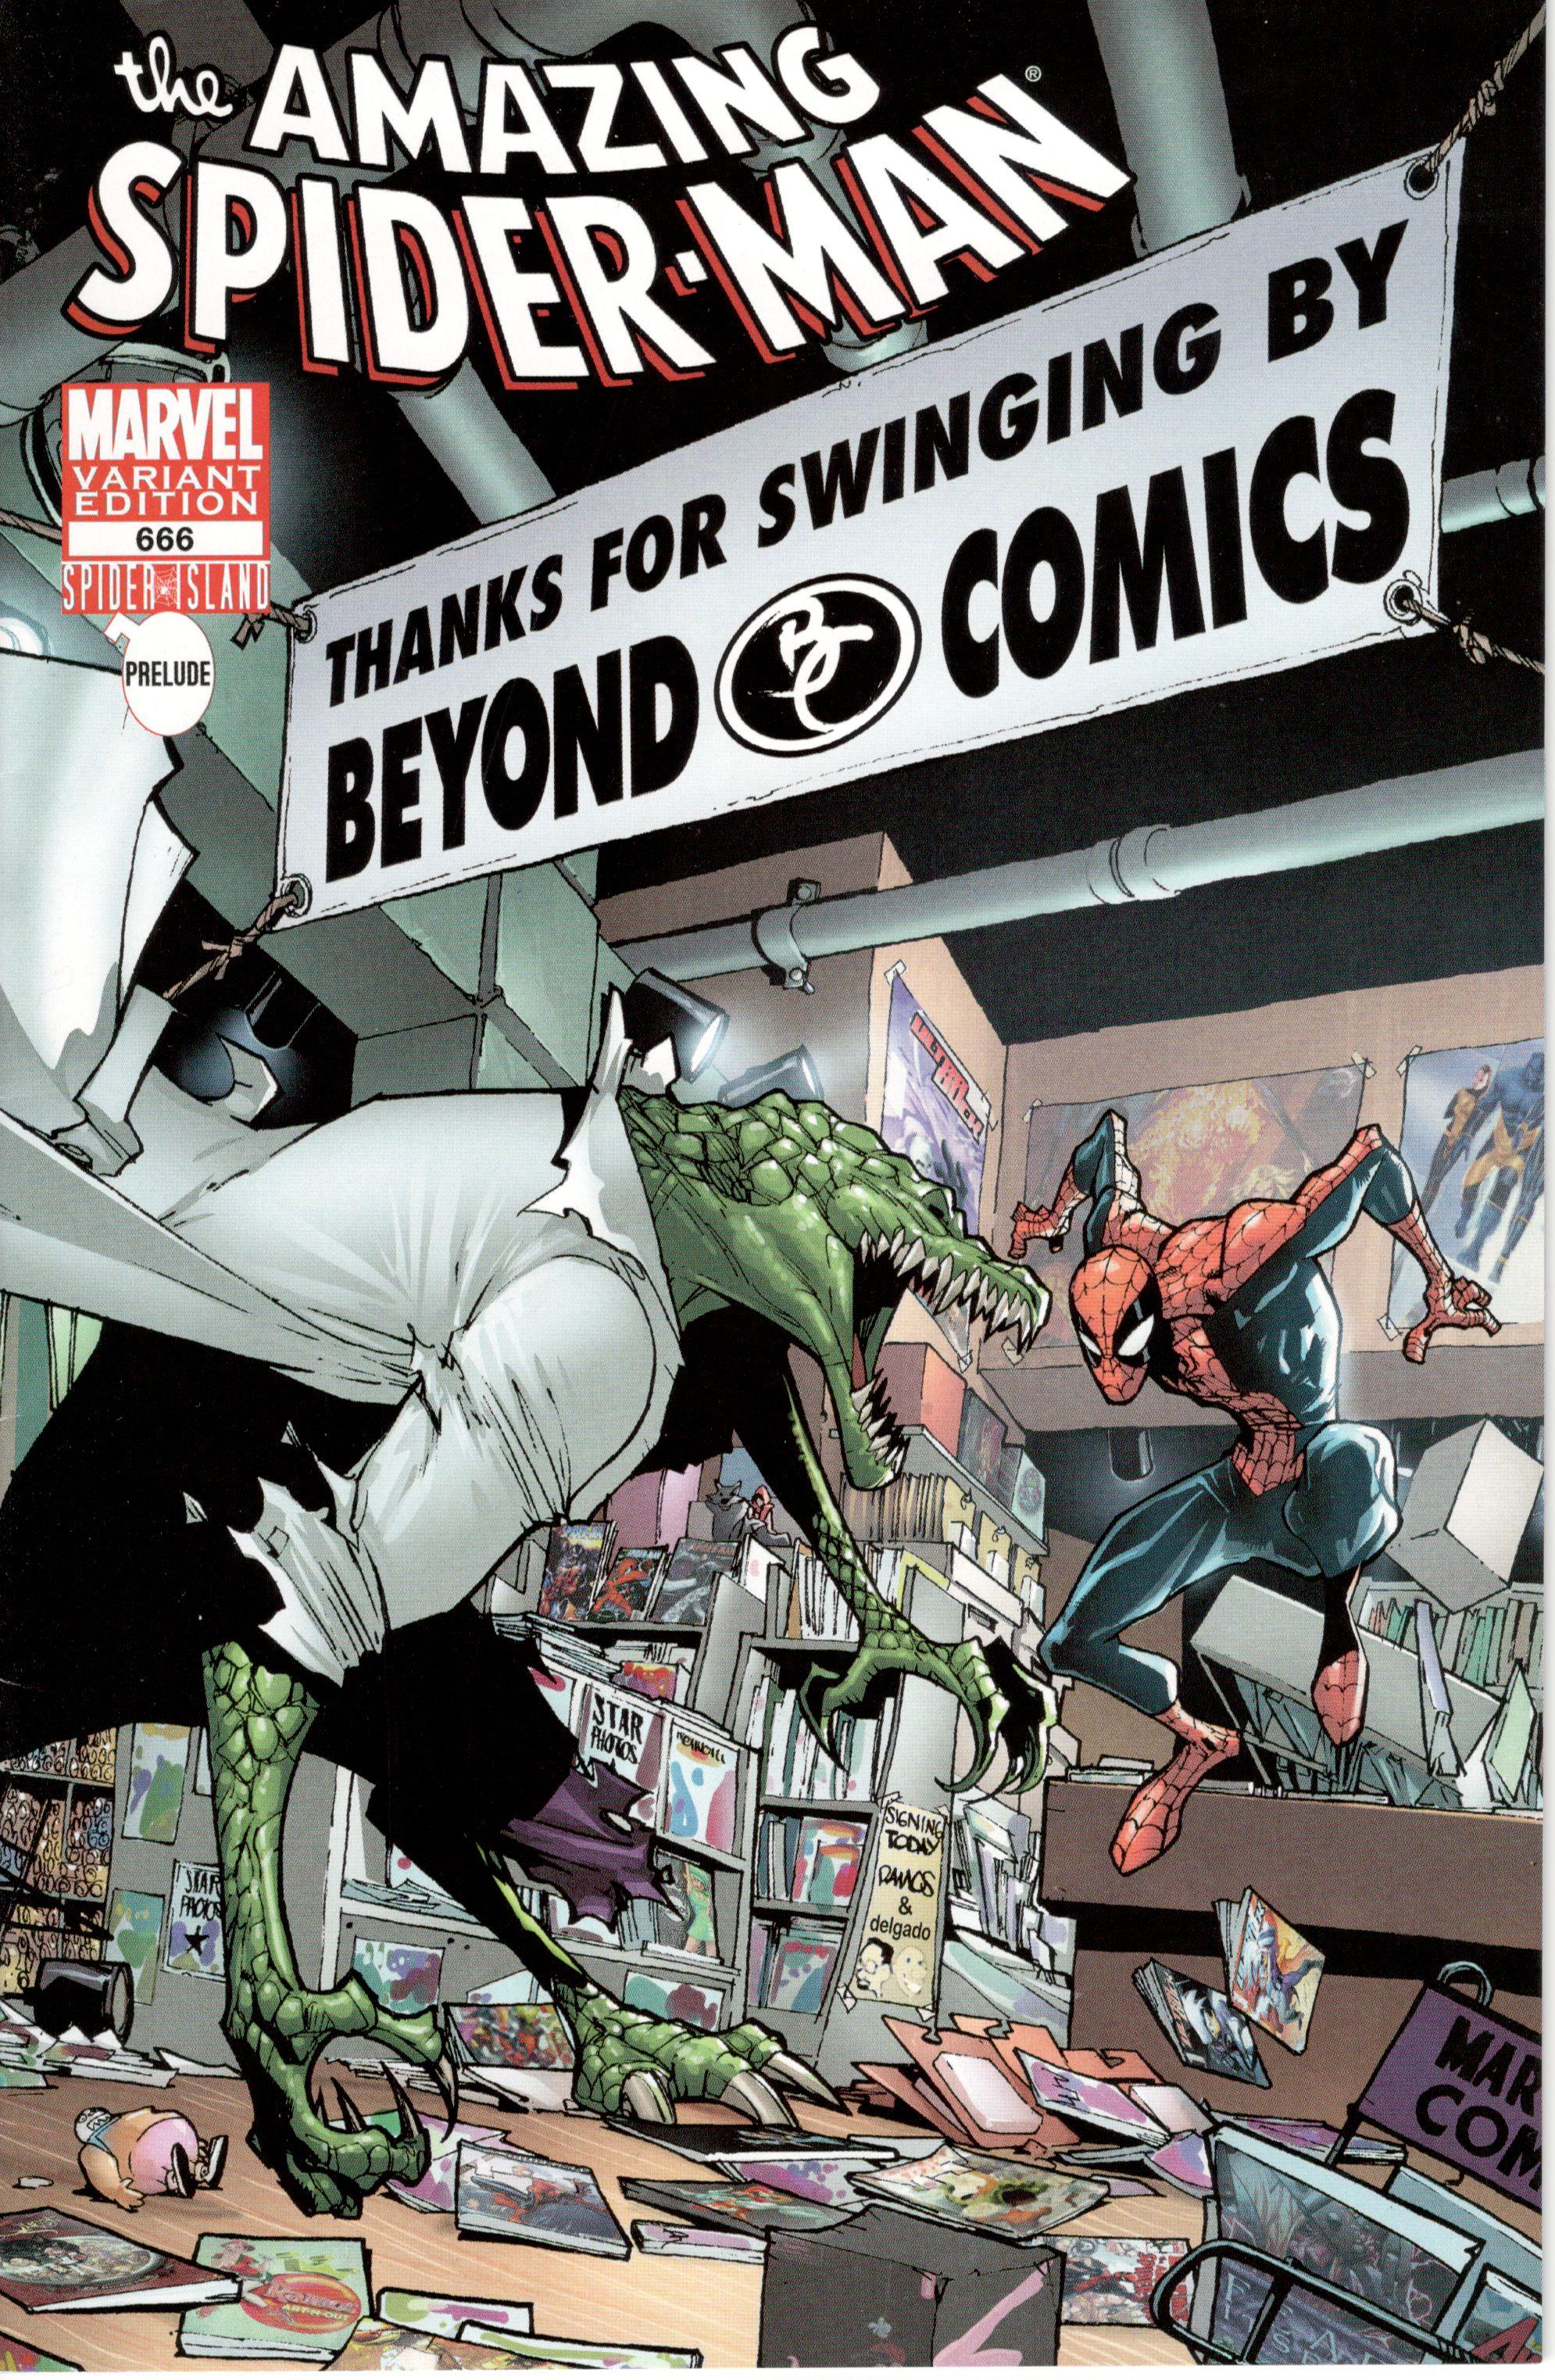 Amazing Spider-Man #666 Beyond Comics Store Variant